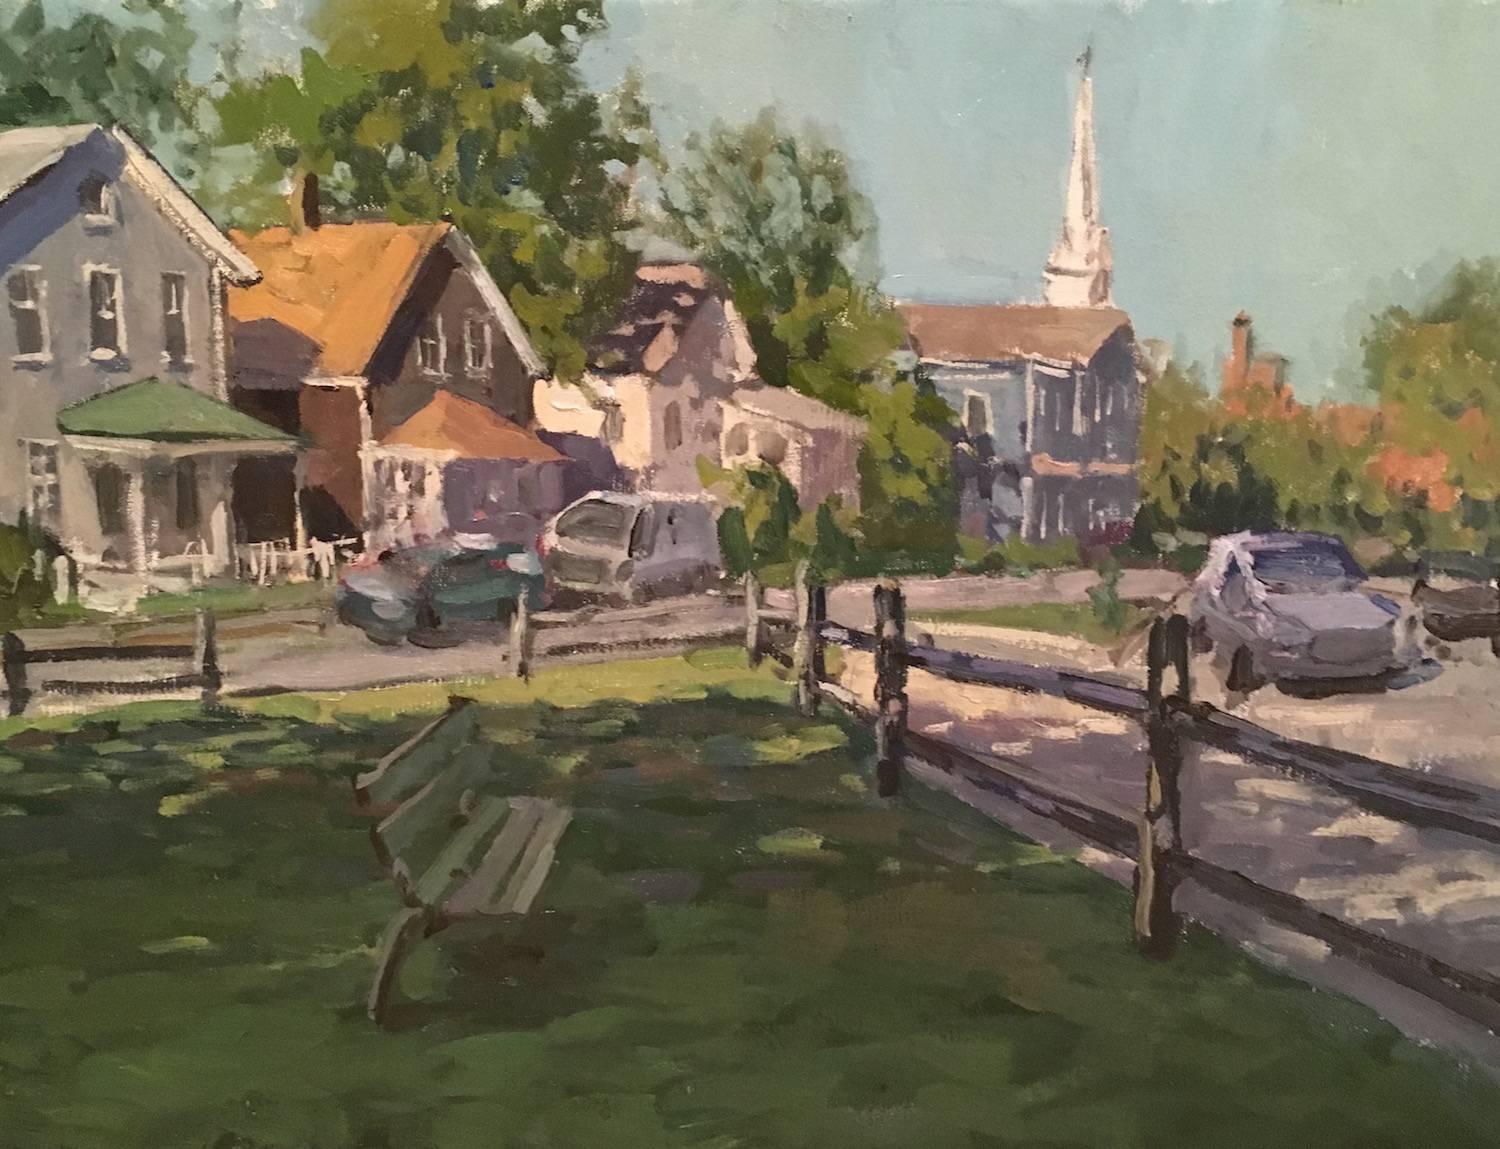 "Village View" - 2016 Ölgemälde des berühmten historischen Hamptons Dorfes Sag Harbor